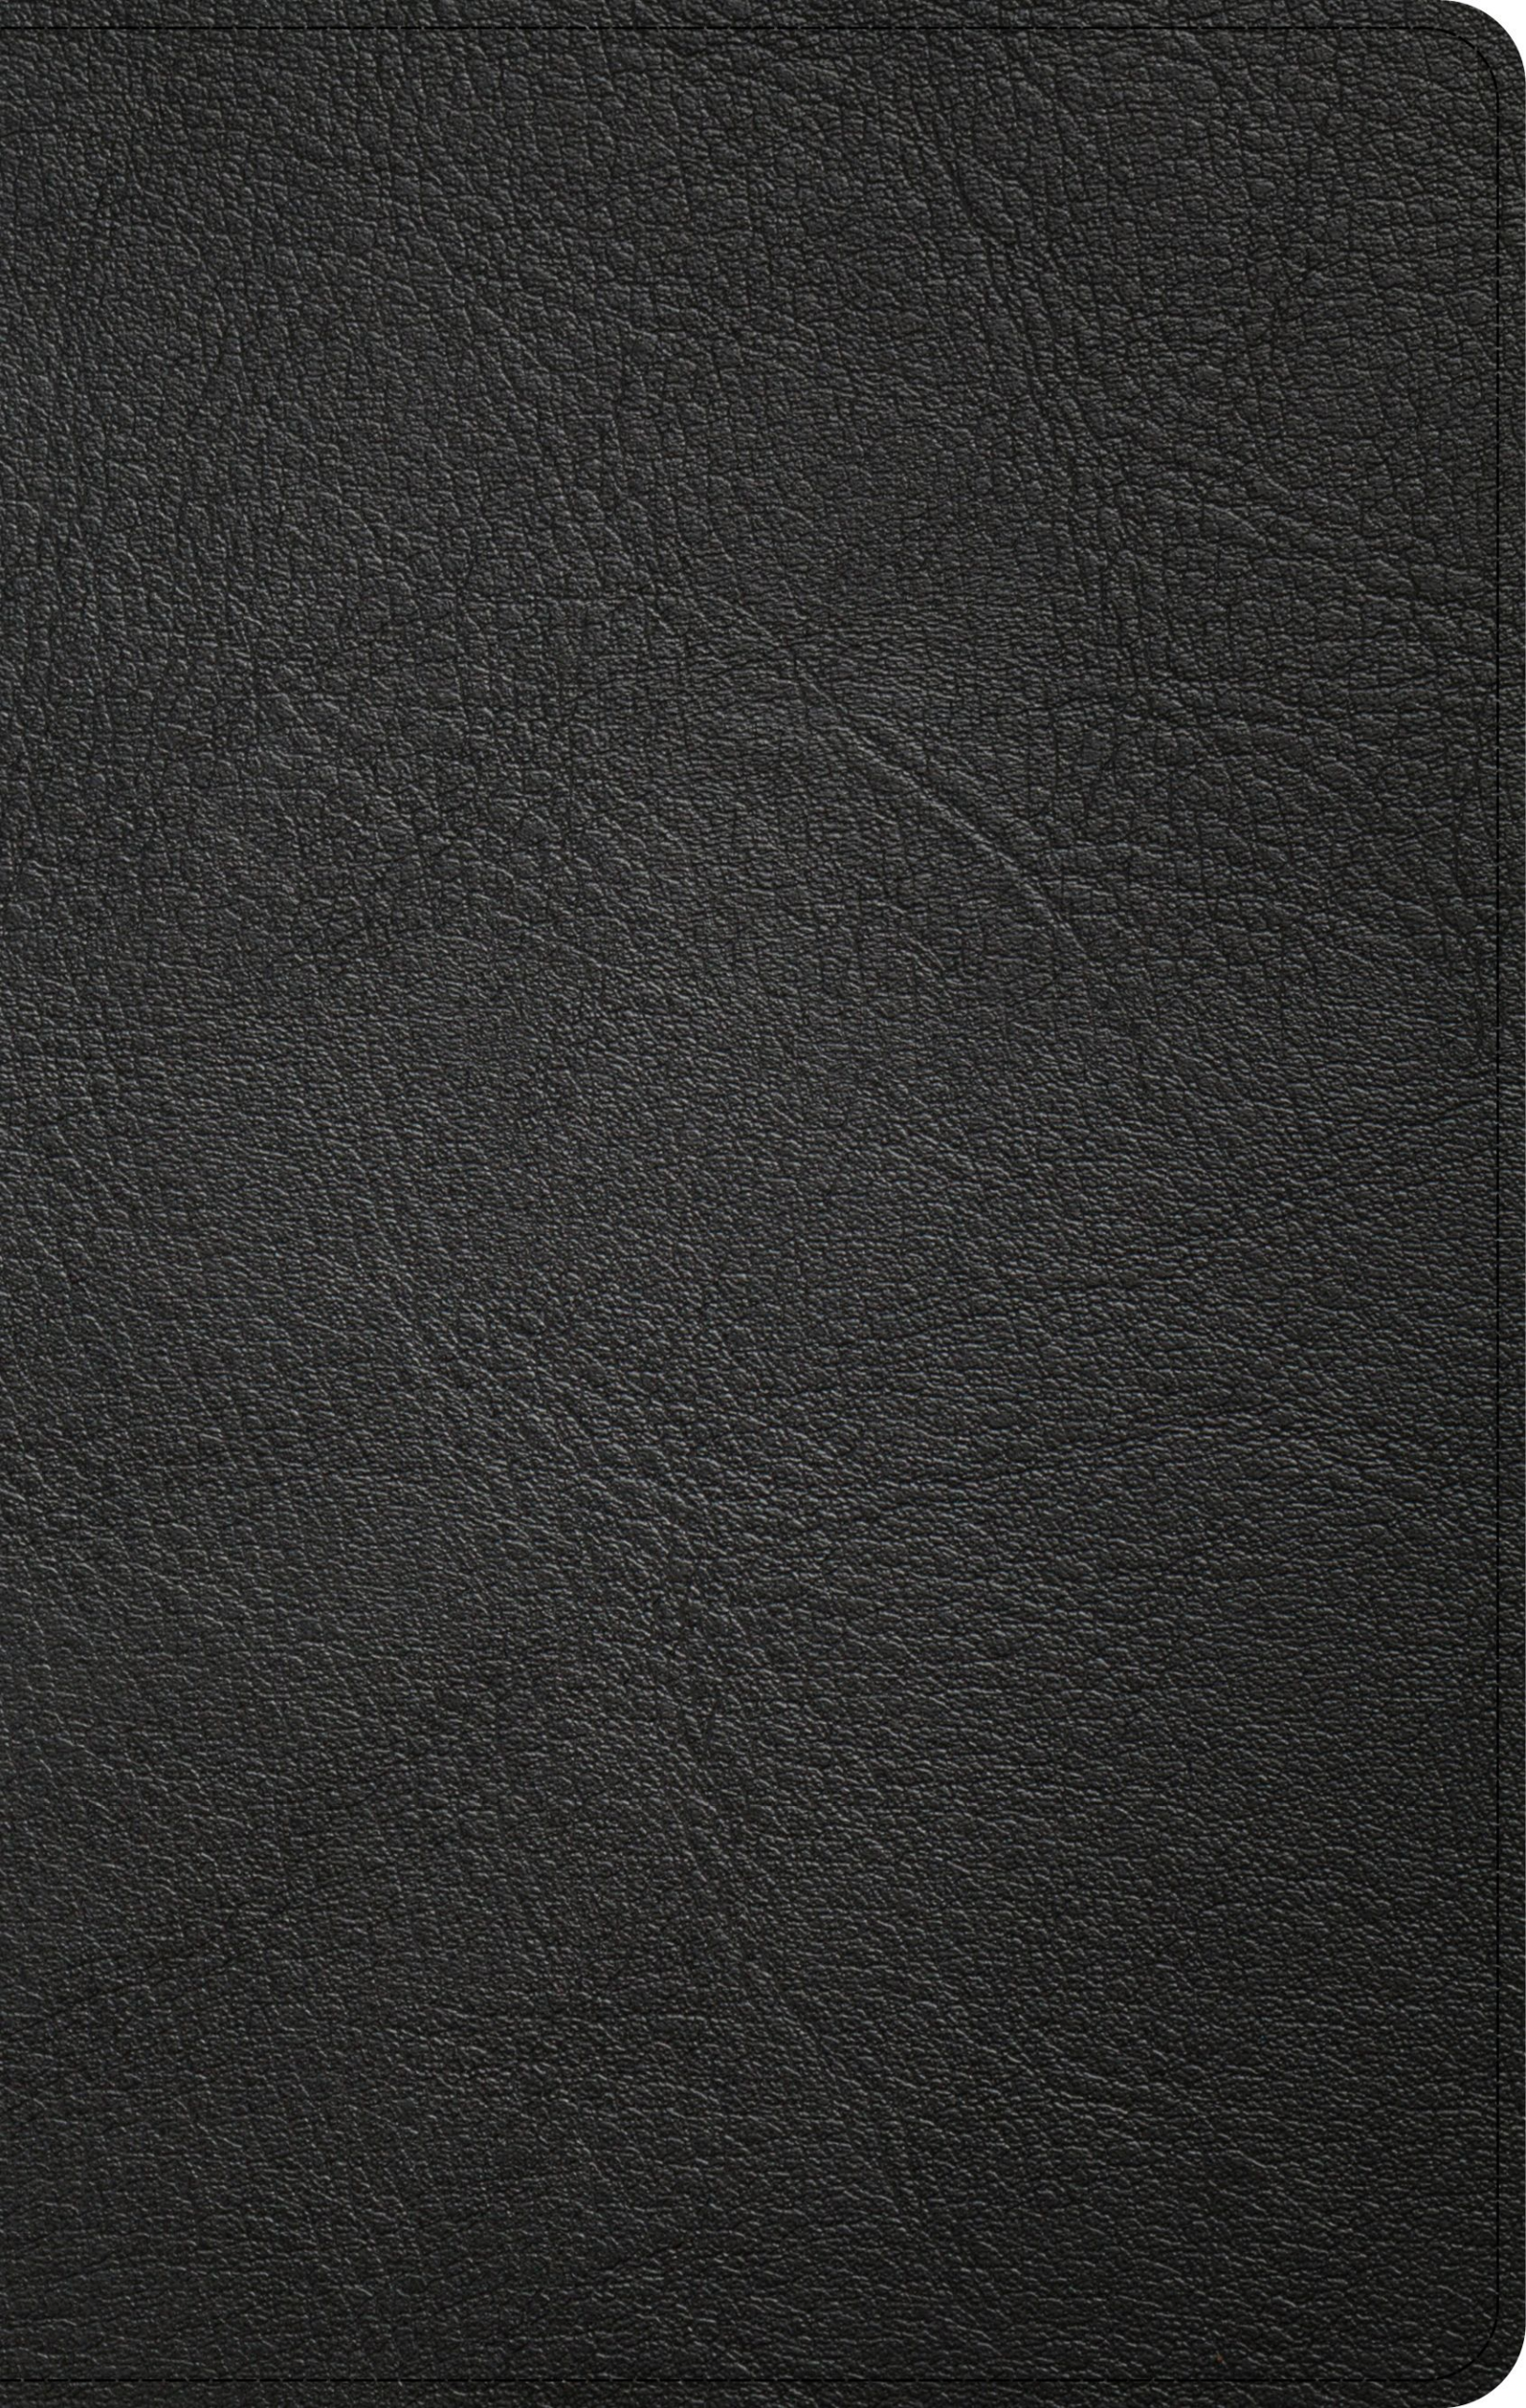 KJV Thinline Reference Bible, Black Genuine Leather